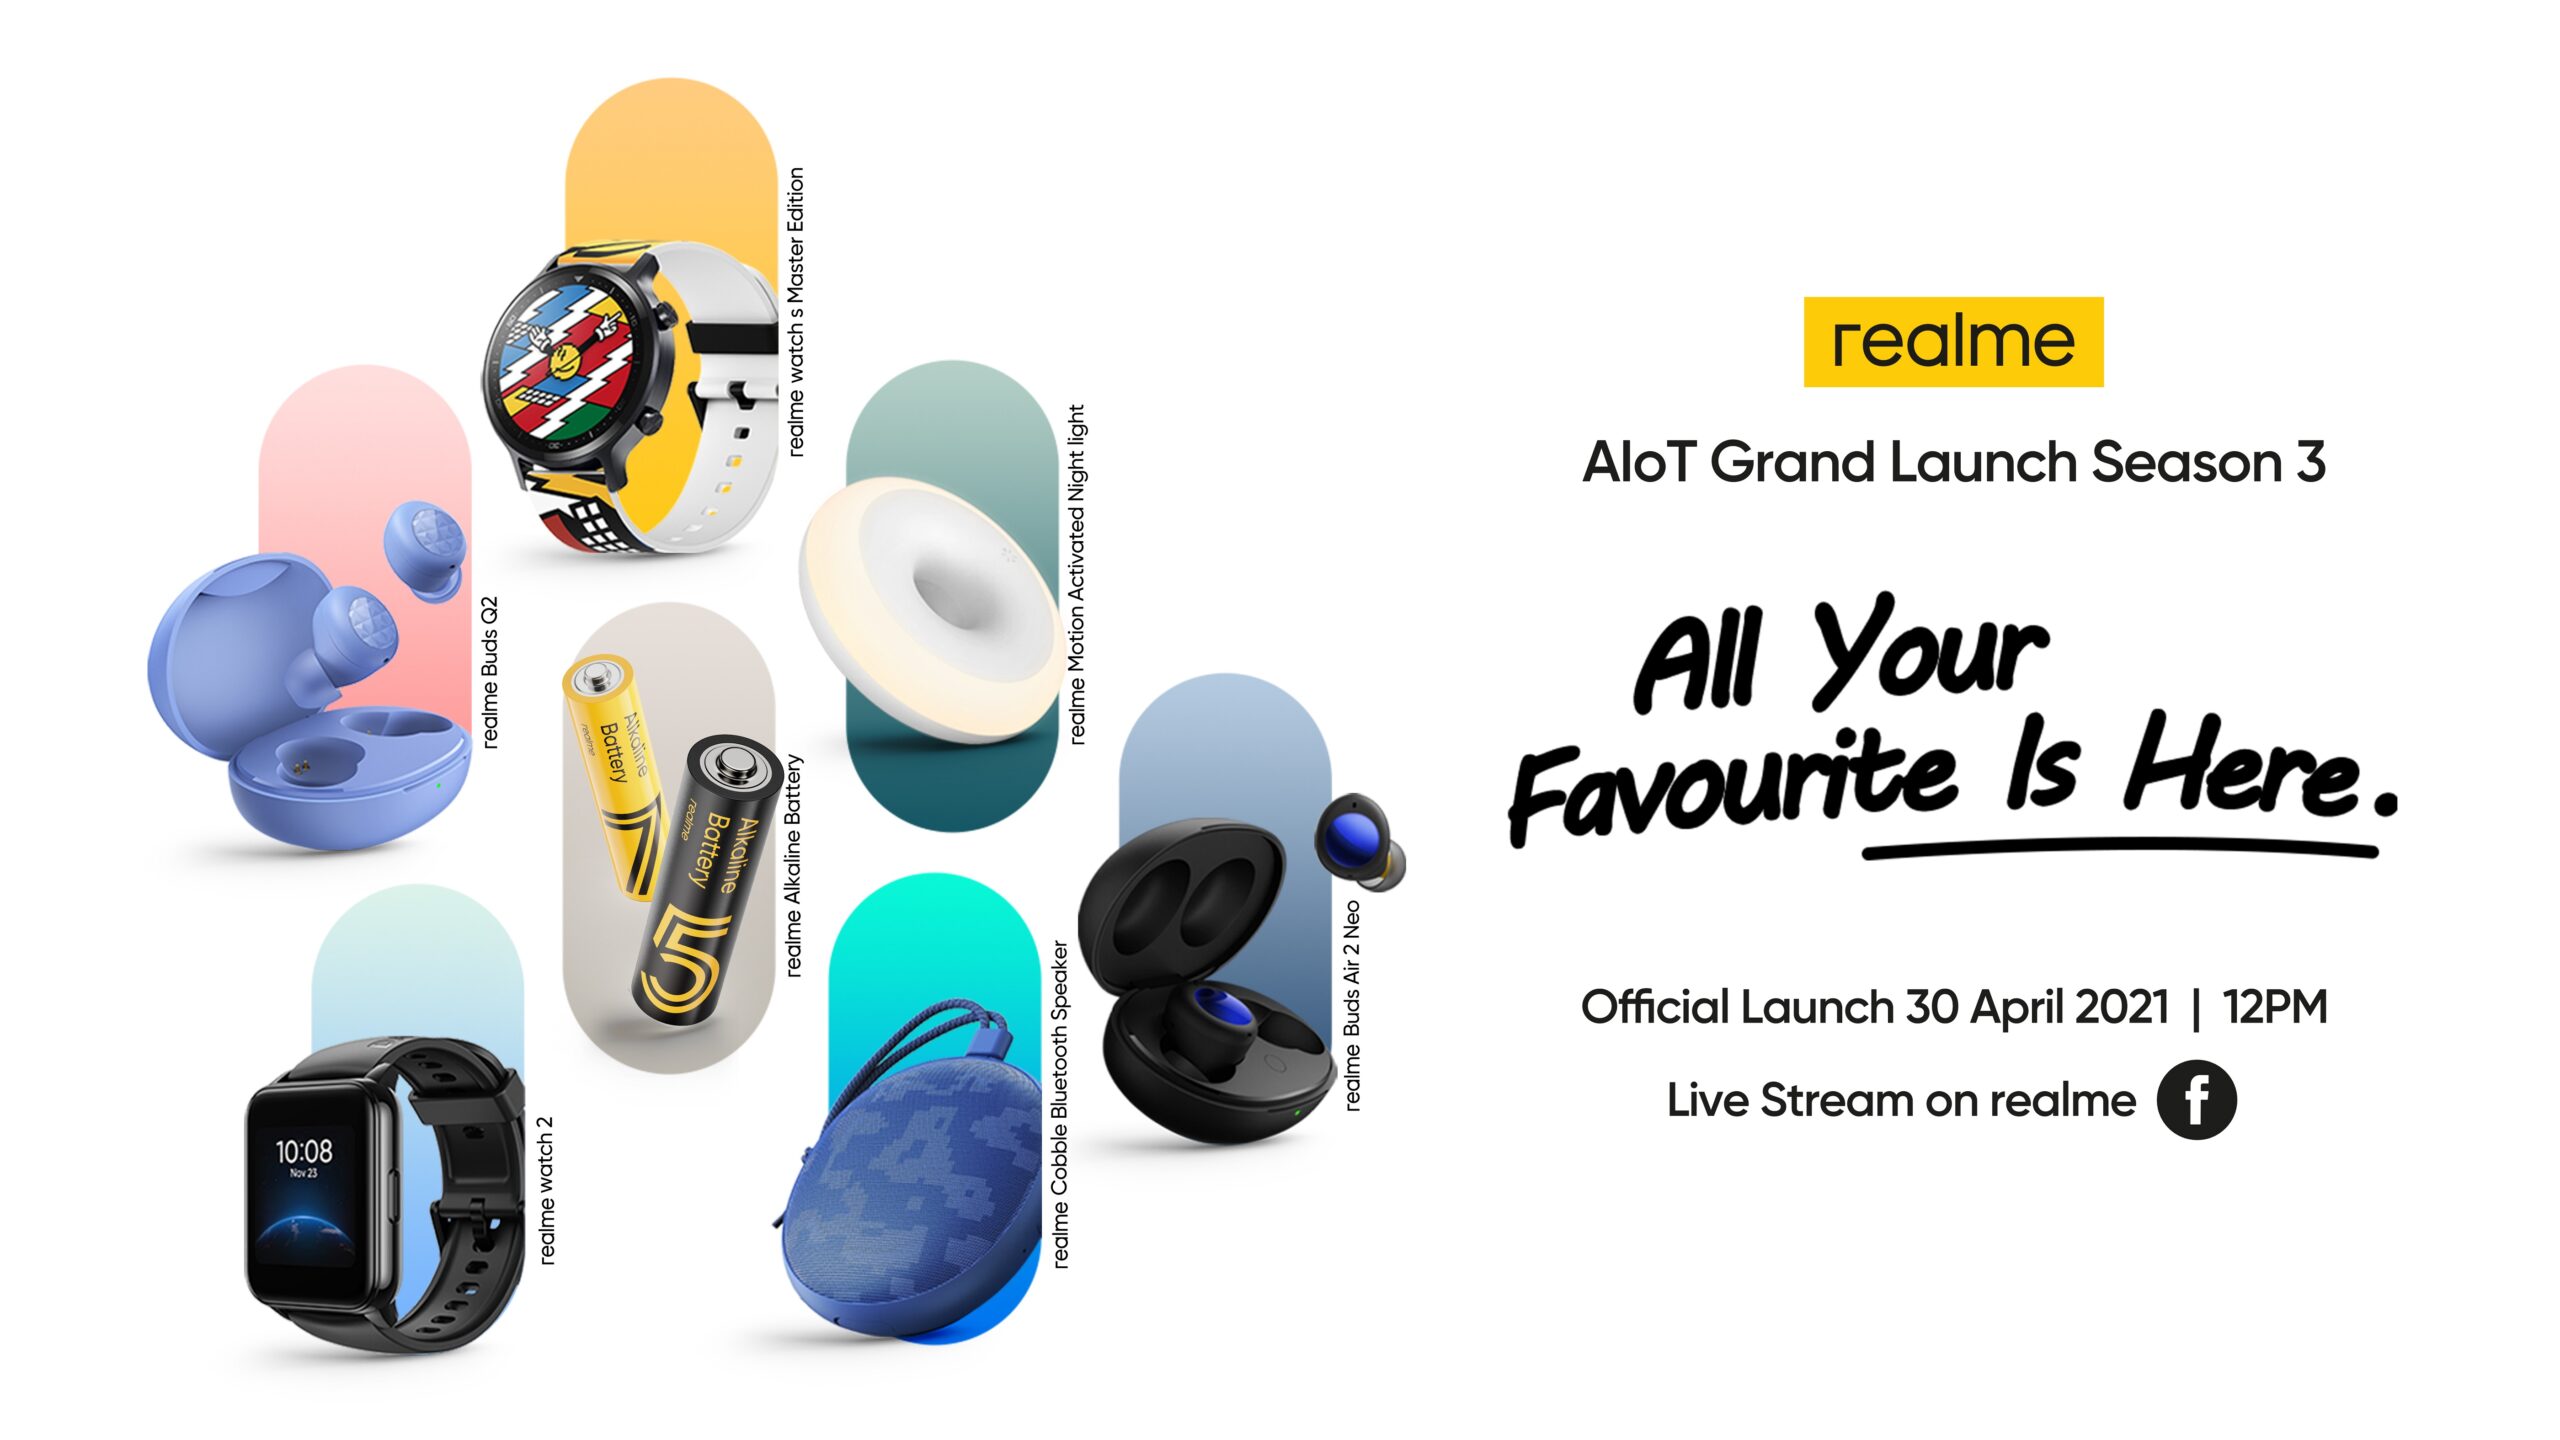 Visual realme AIoT Grand Launch Season 3 scaled